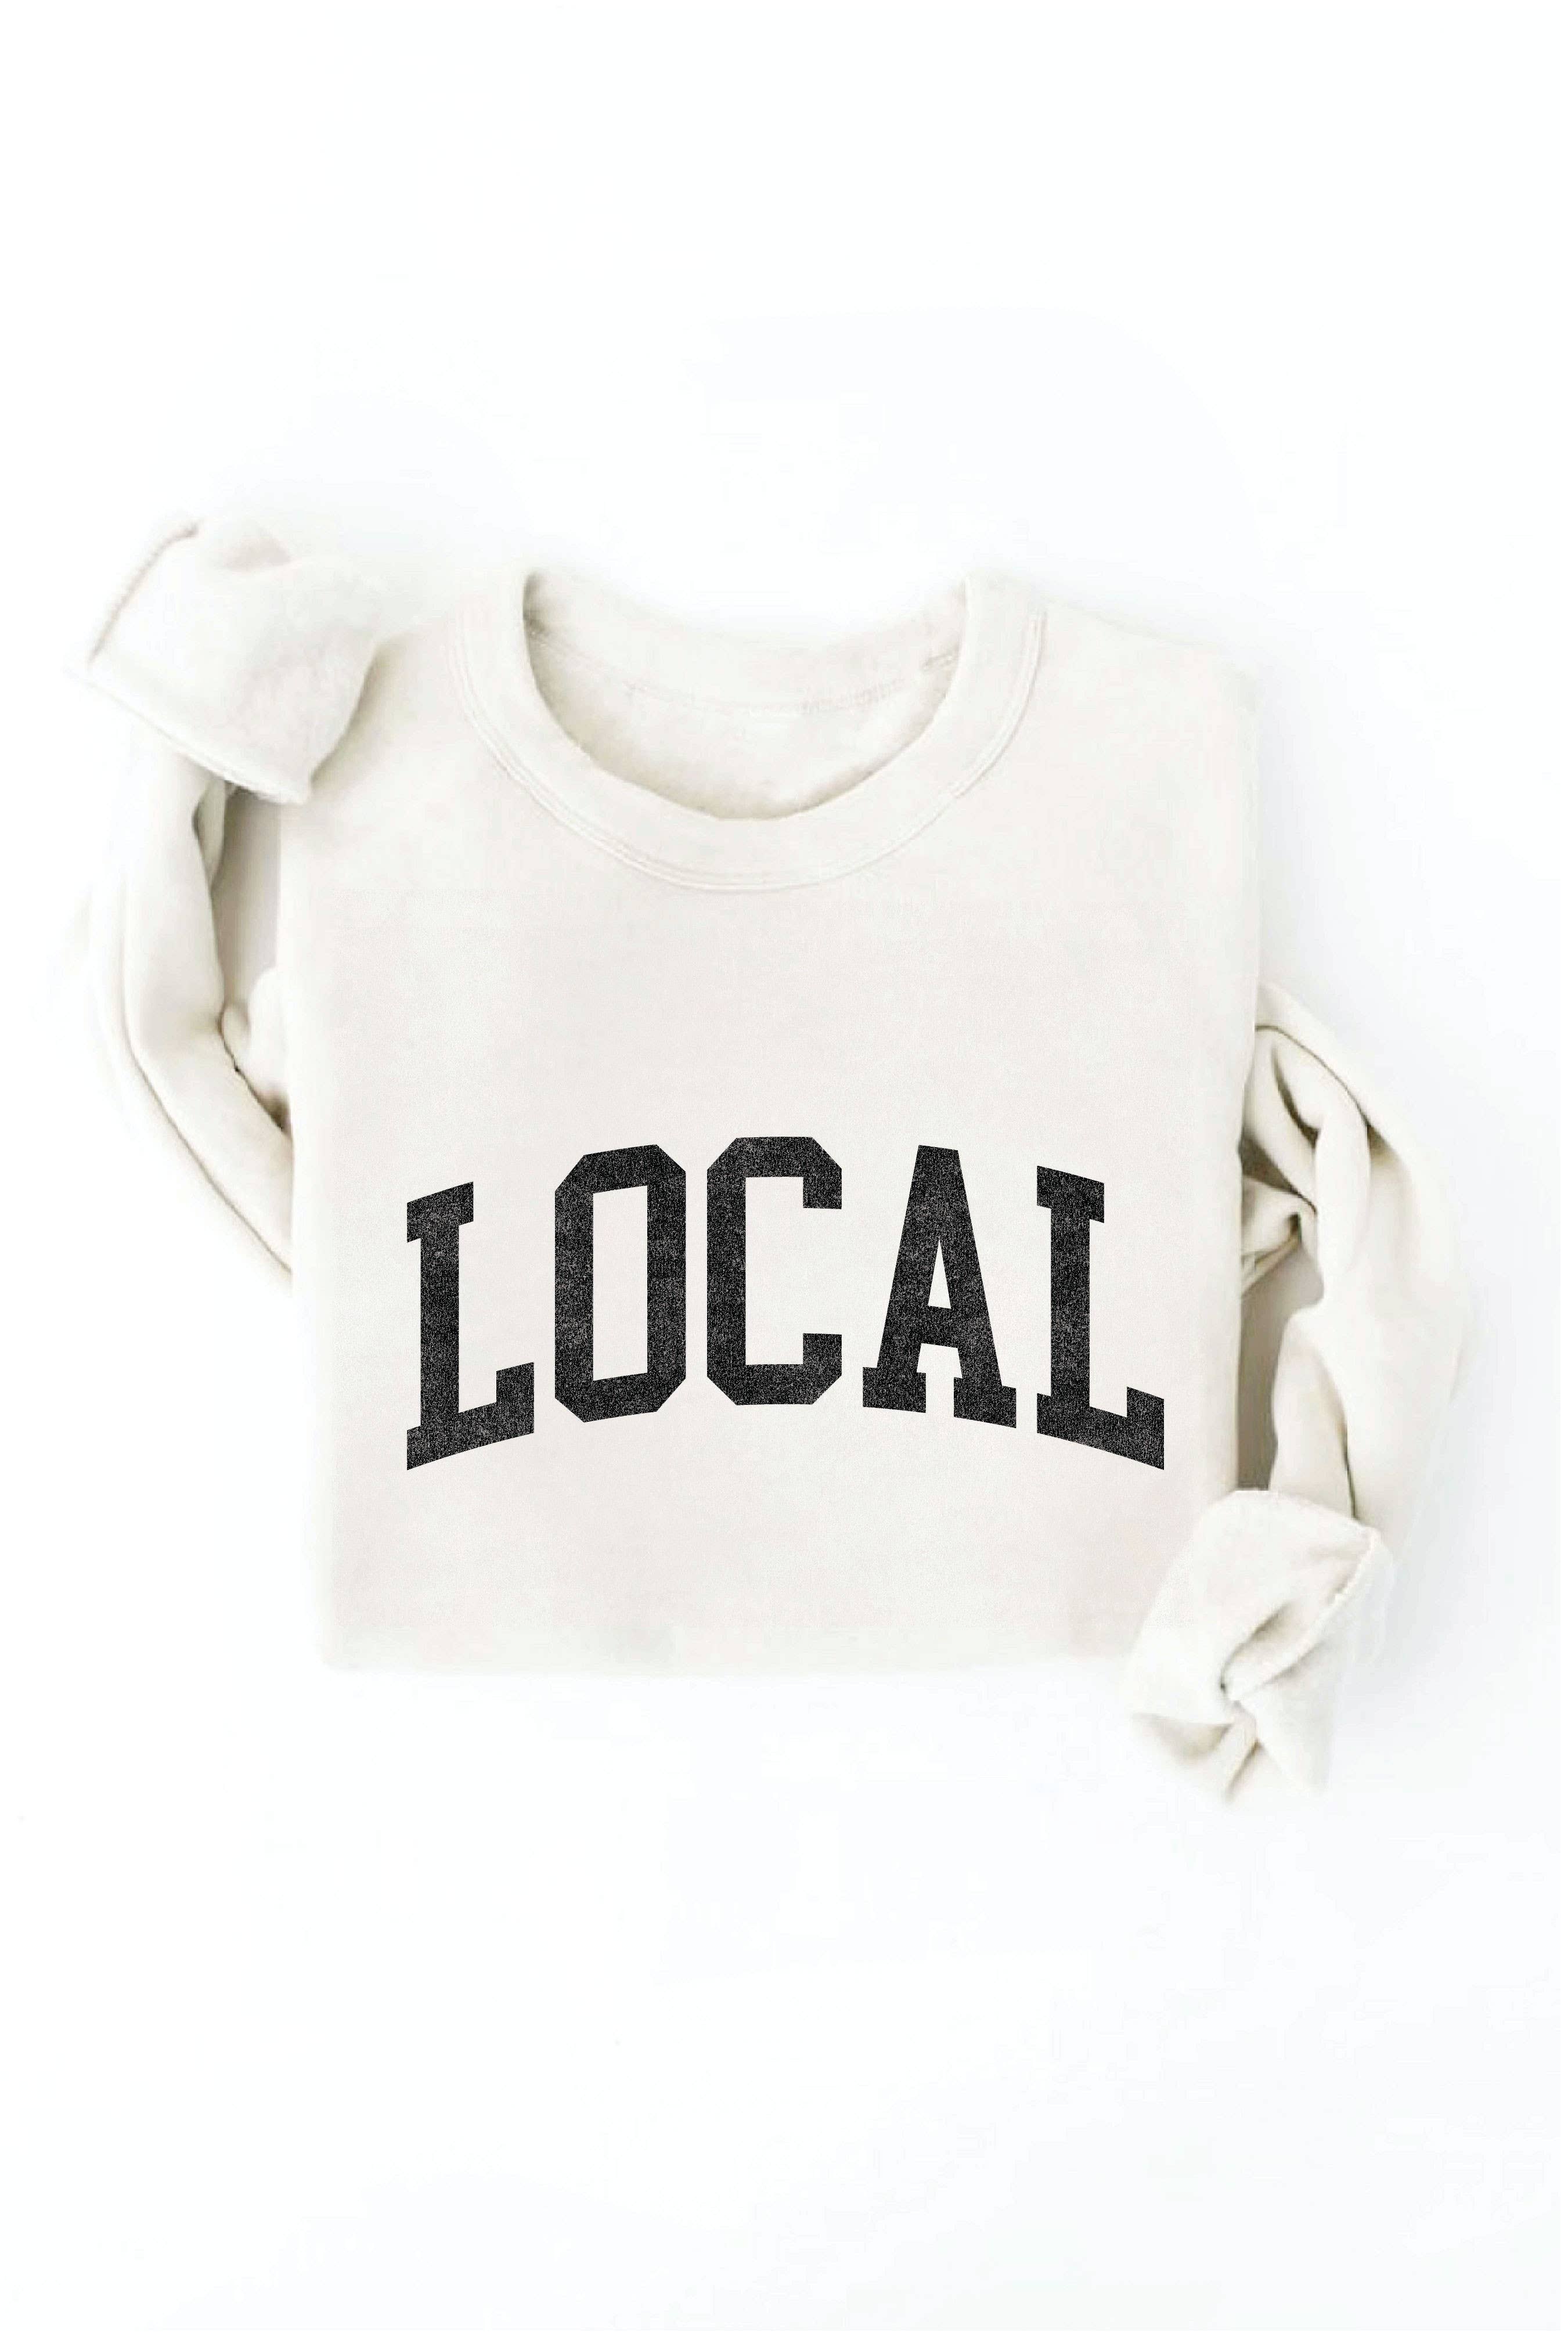 LOCAL graphic sweatshirt: L / MAUVE